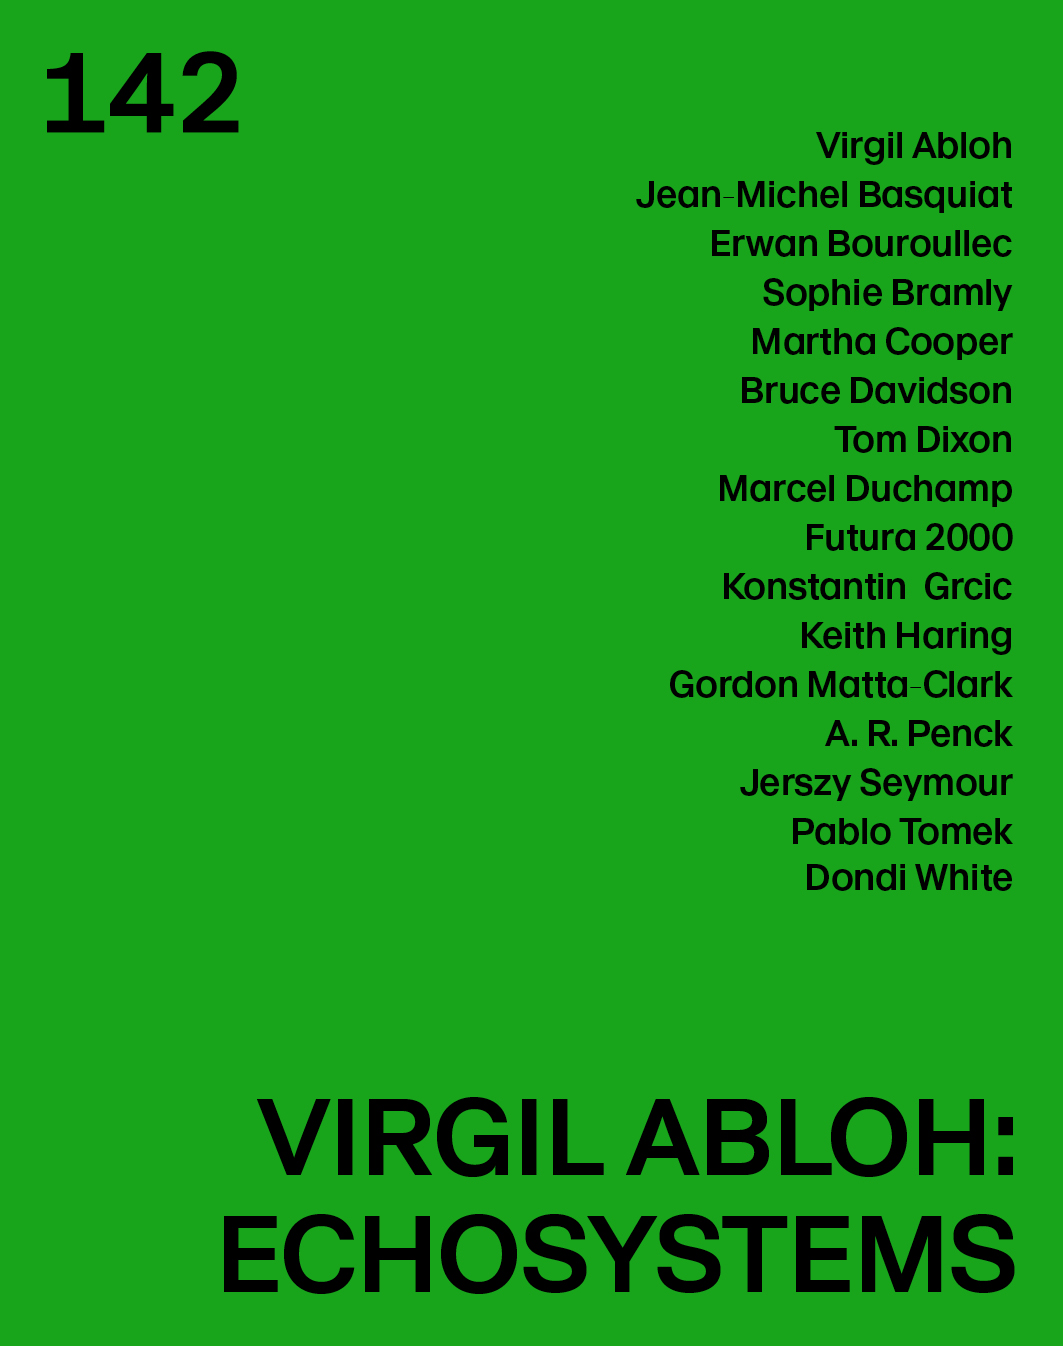 Virgil Abloh, Art for Sale, Results & Biography